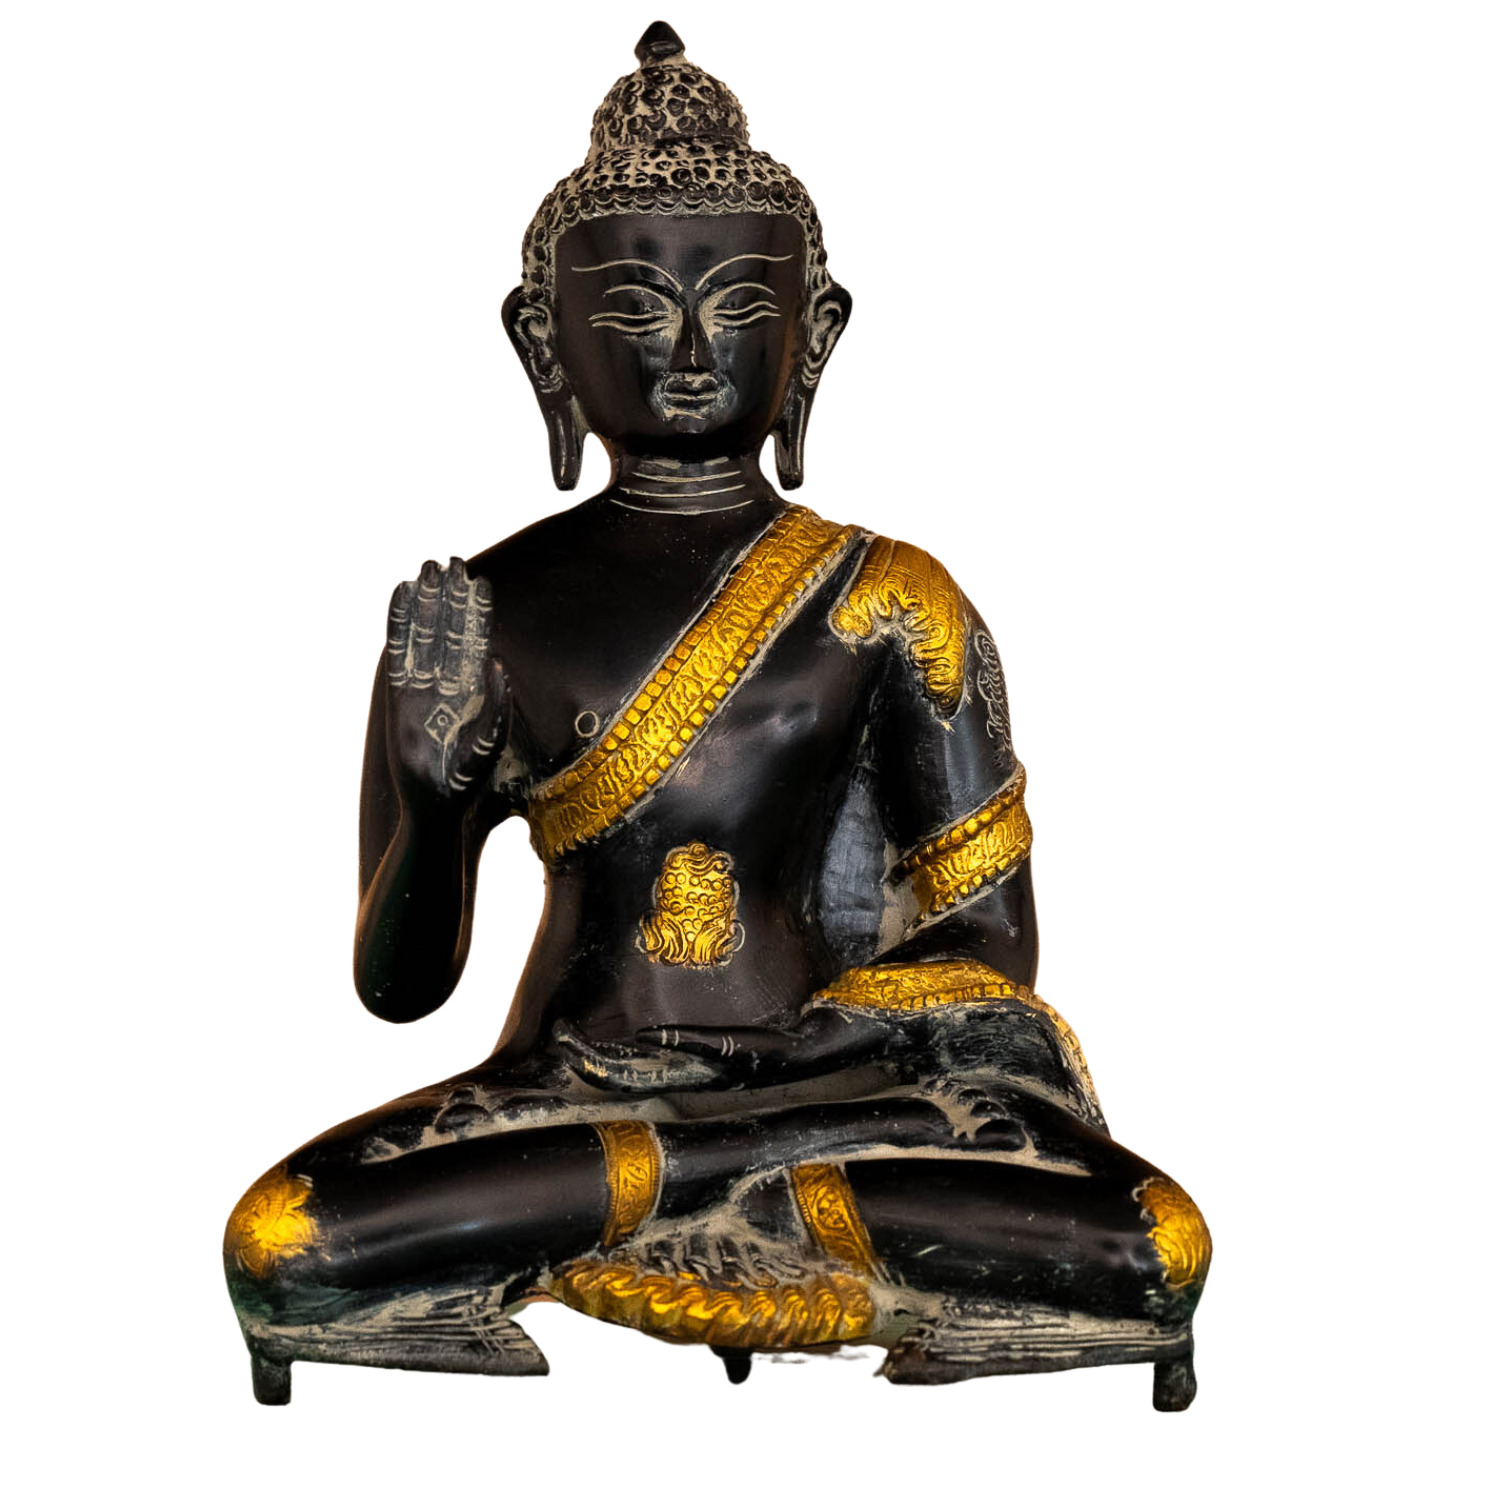 indigenite Brass Buddha Statue | Size - (11 x 6 x 8) Inches, Weight: 3.5 kgs apx